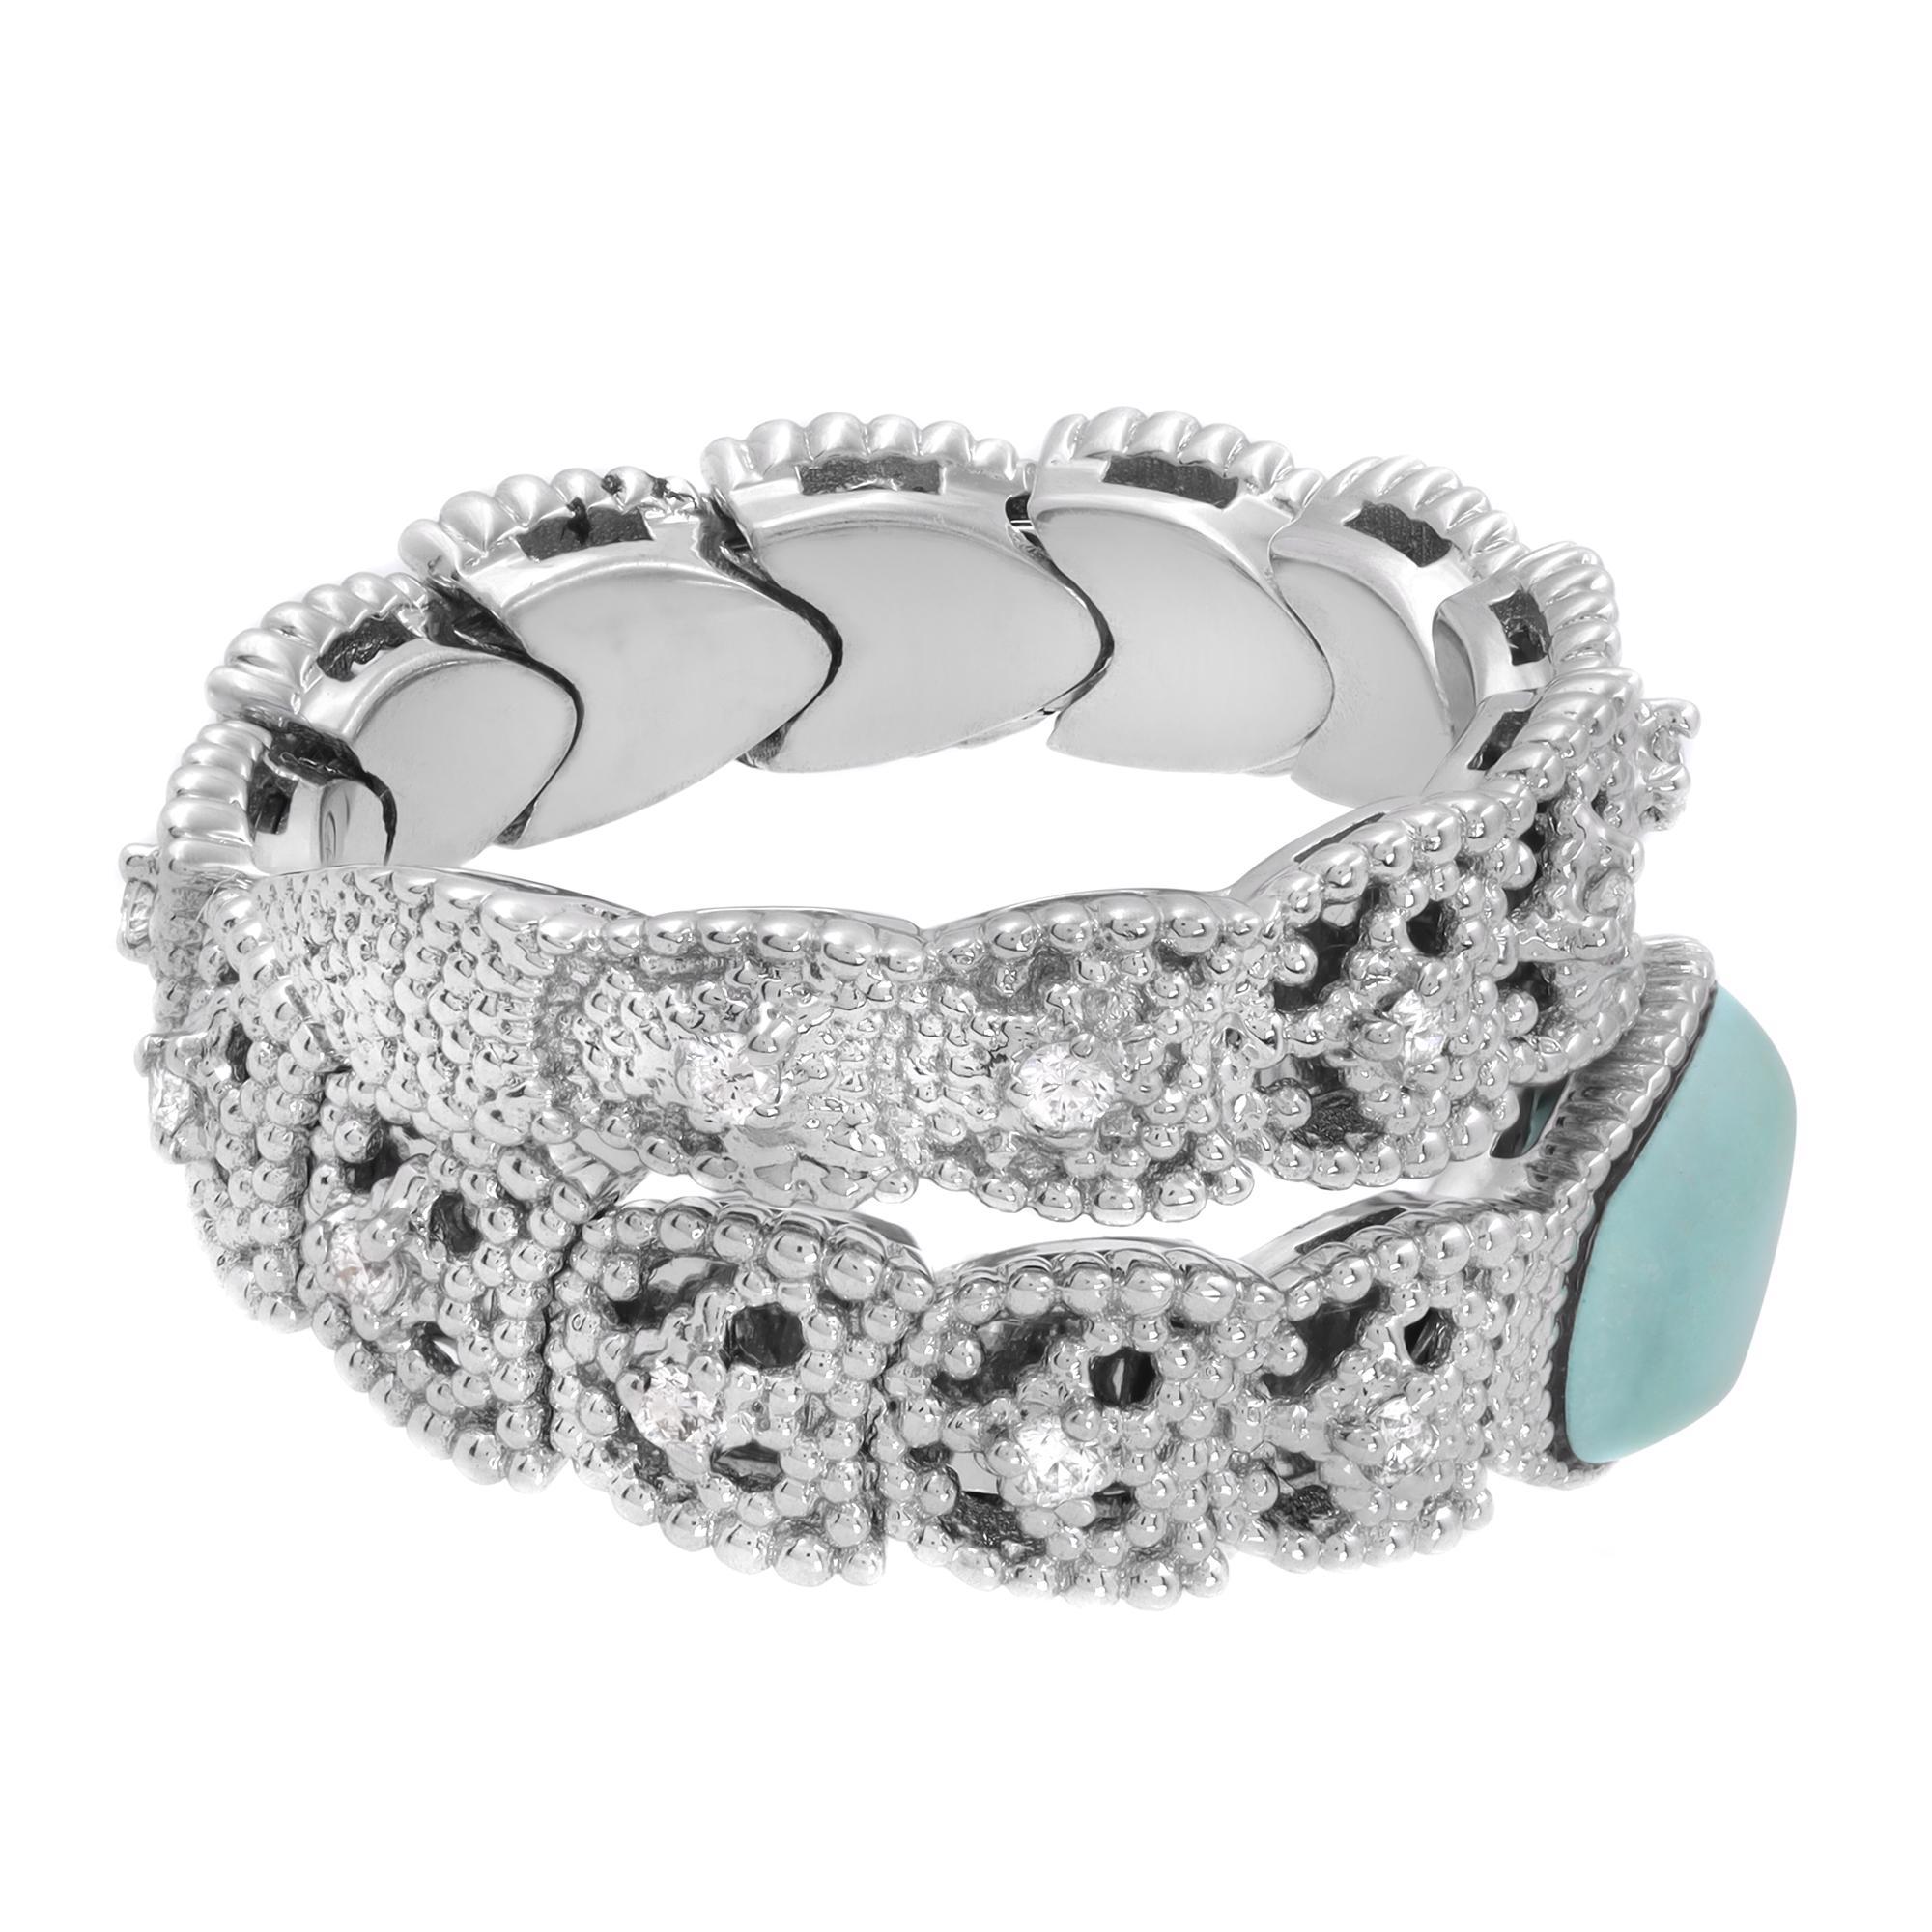 Rough Cut Piero Milano Natural Diamond & Turquoise Ring 18k White Gold 0.18cttw Size 6.5 For Sale